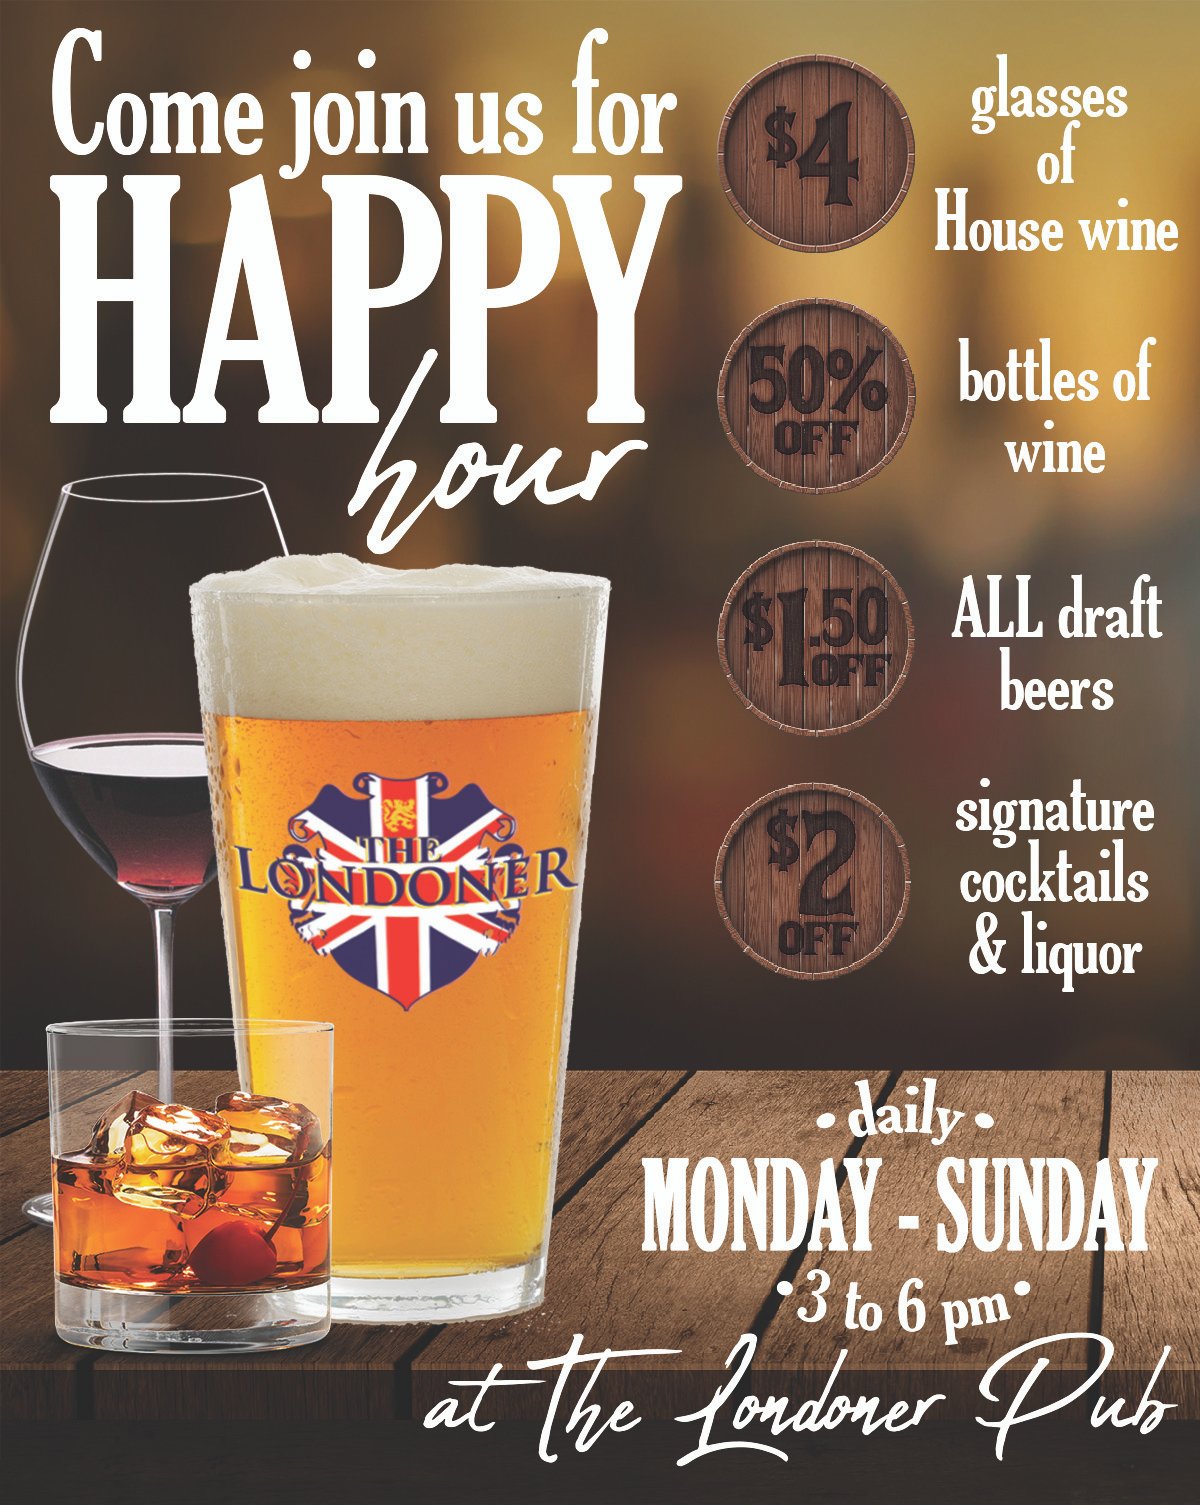 The Londoner Pub Happy Hour promotion